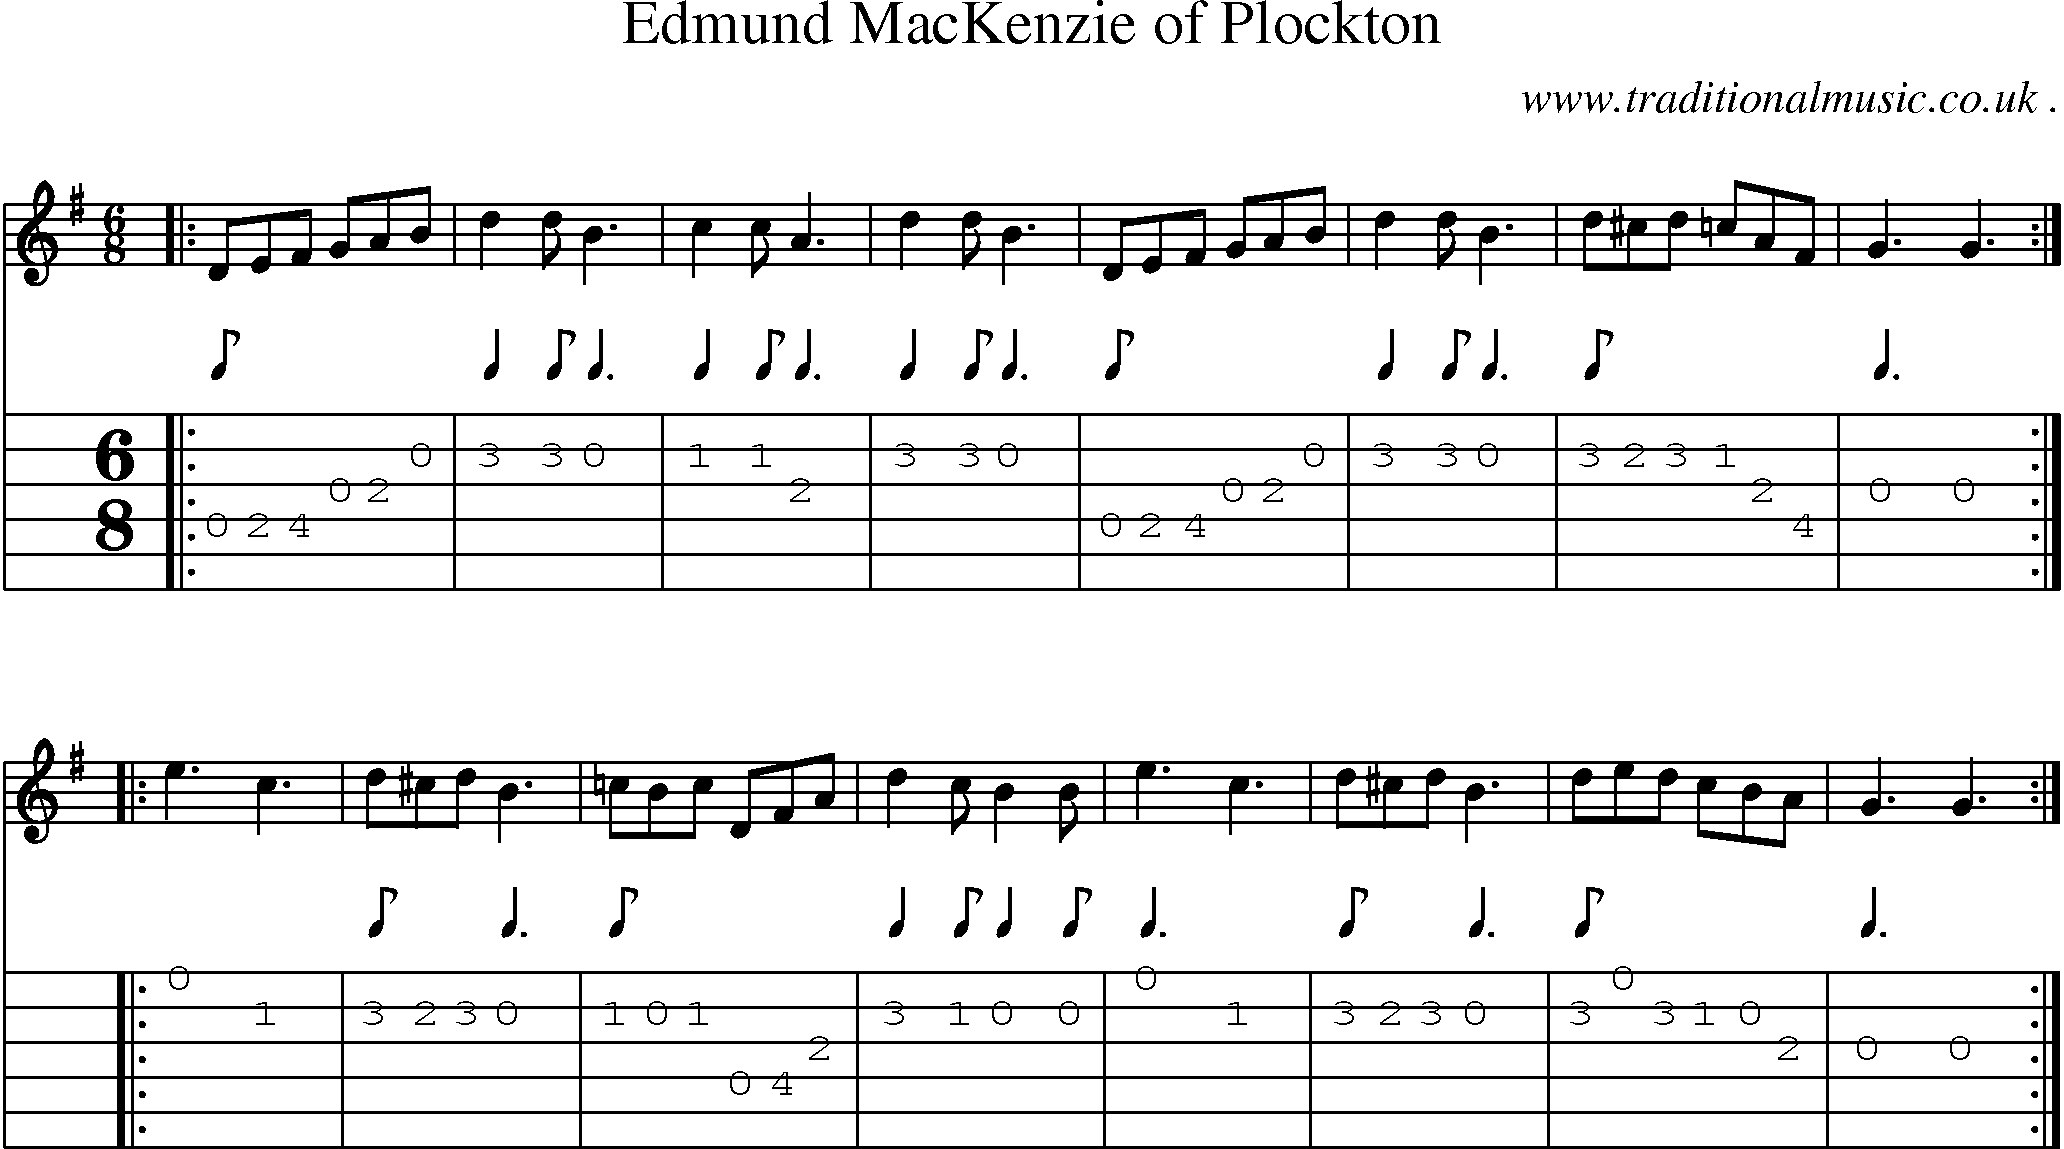 Sheet-music  score, Chords and Guitar Tabs for Edmund Mackenzie Of Plockton